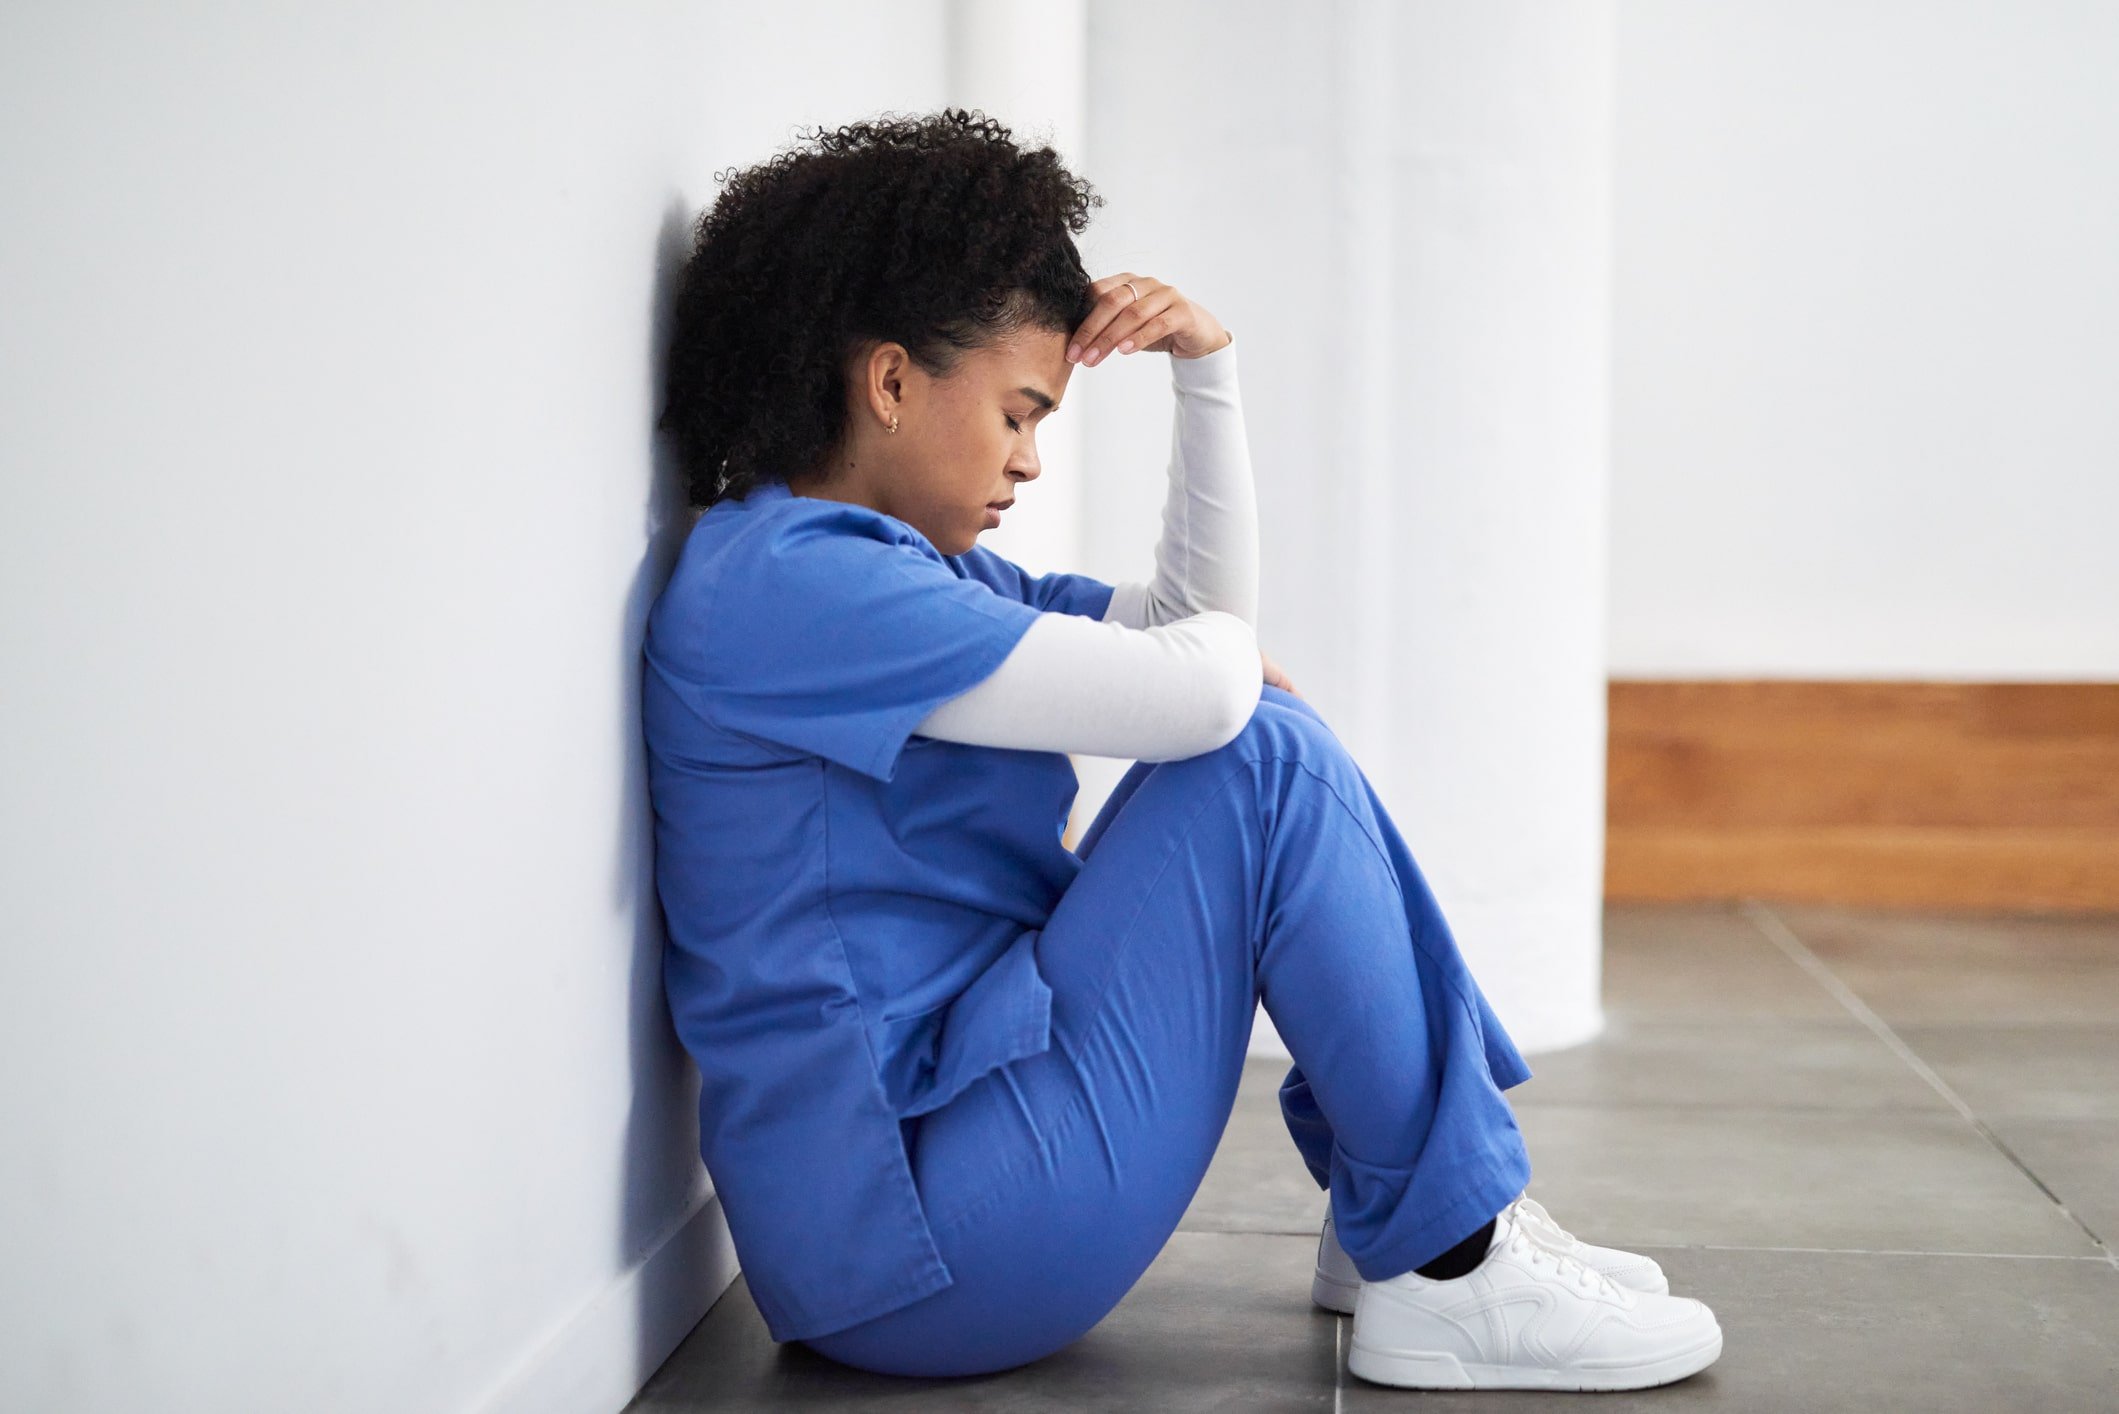 Stream Compassion Fatigue Meditation For Nurses by Yoga Nurse